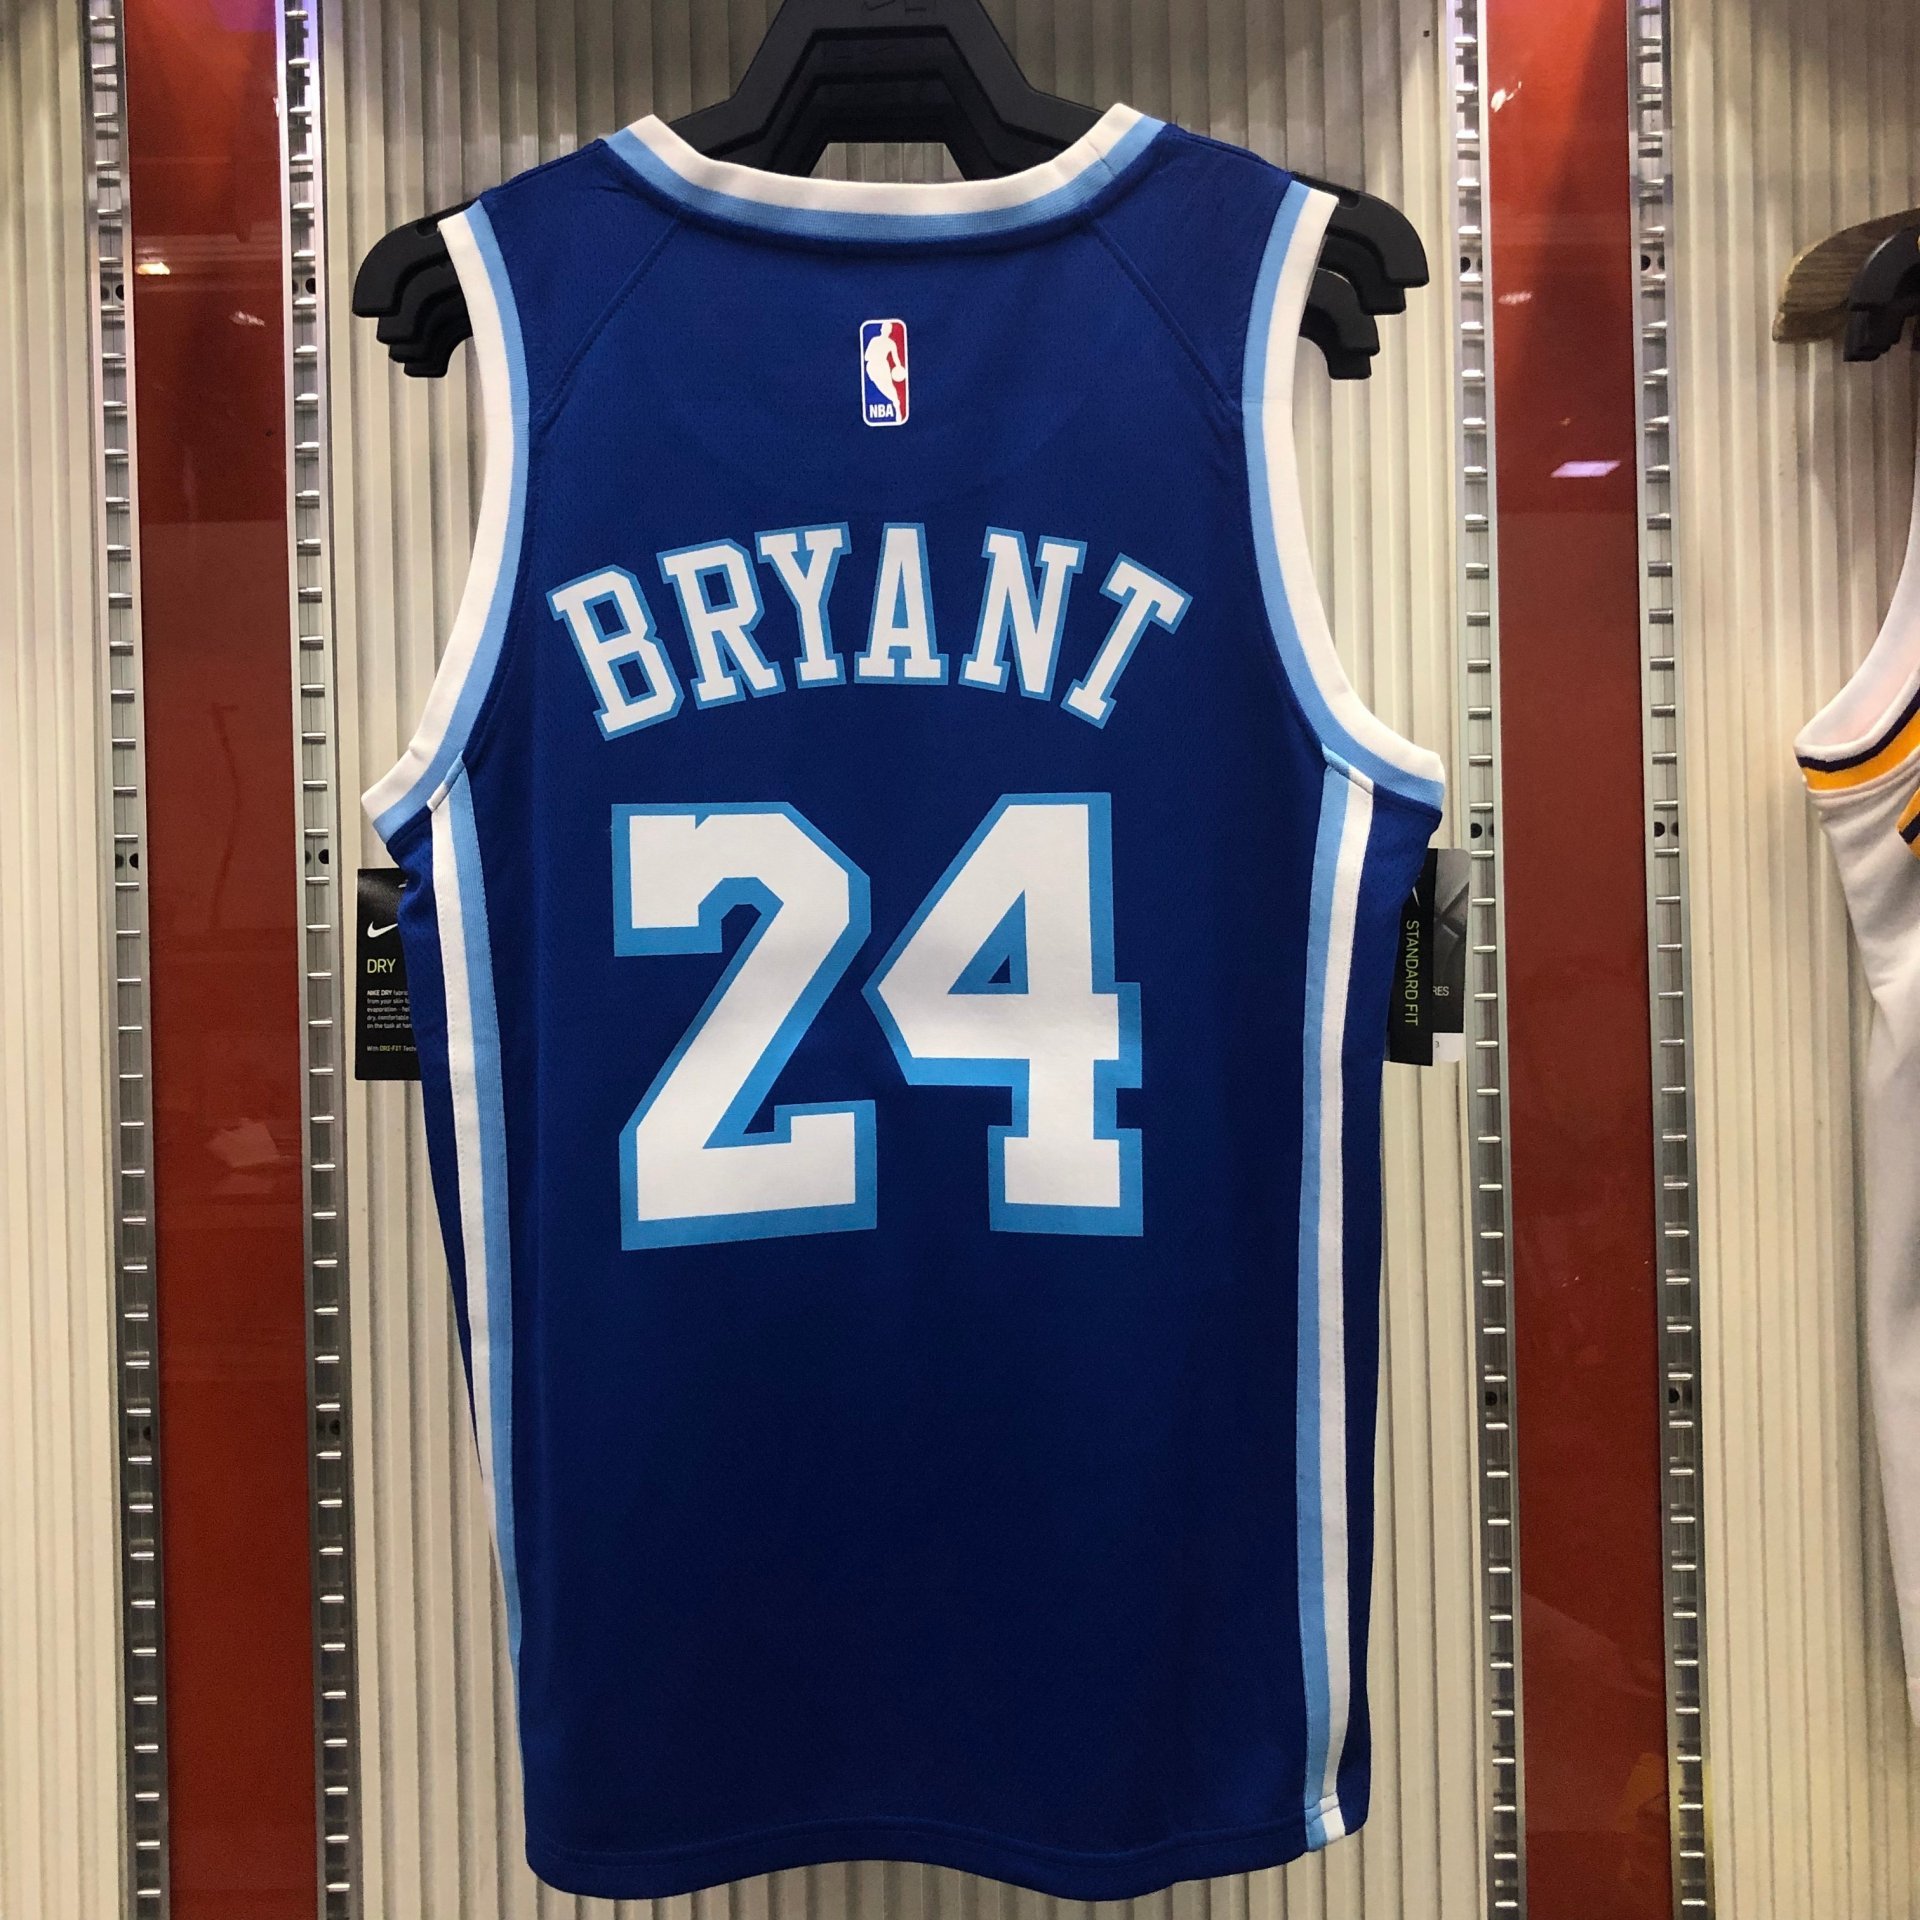 Men's Los Angeles Lakers Kobe Bryant #8 Nike Blue 2020 Swingman